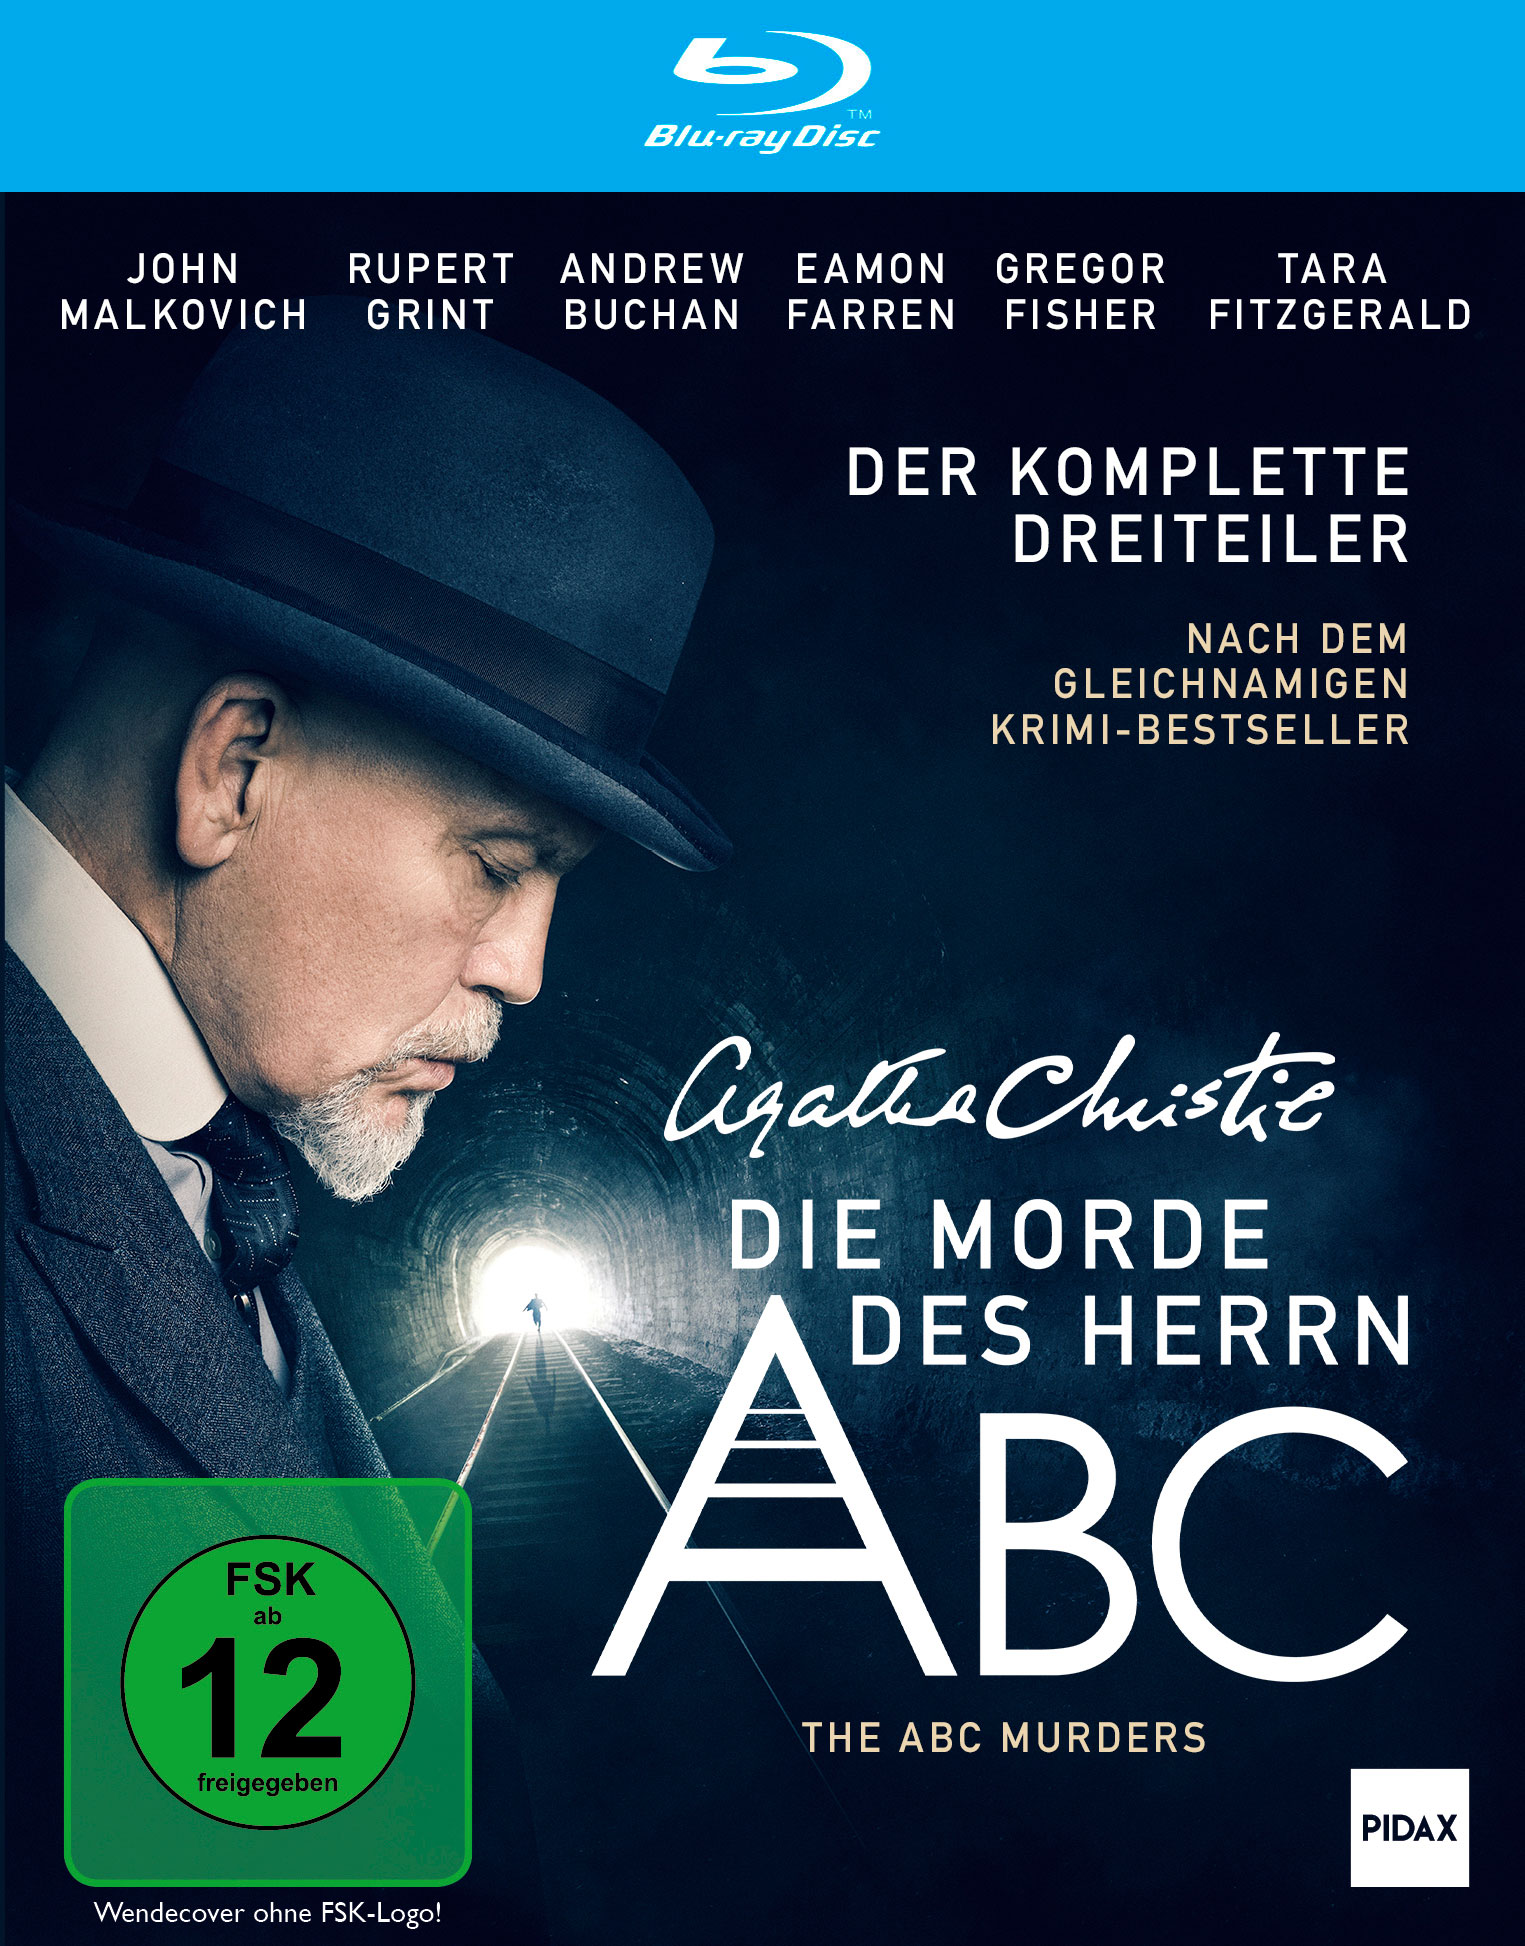 Agatha Christie: Die Morde des Herrn ABC (The ABC Murders)